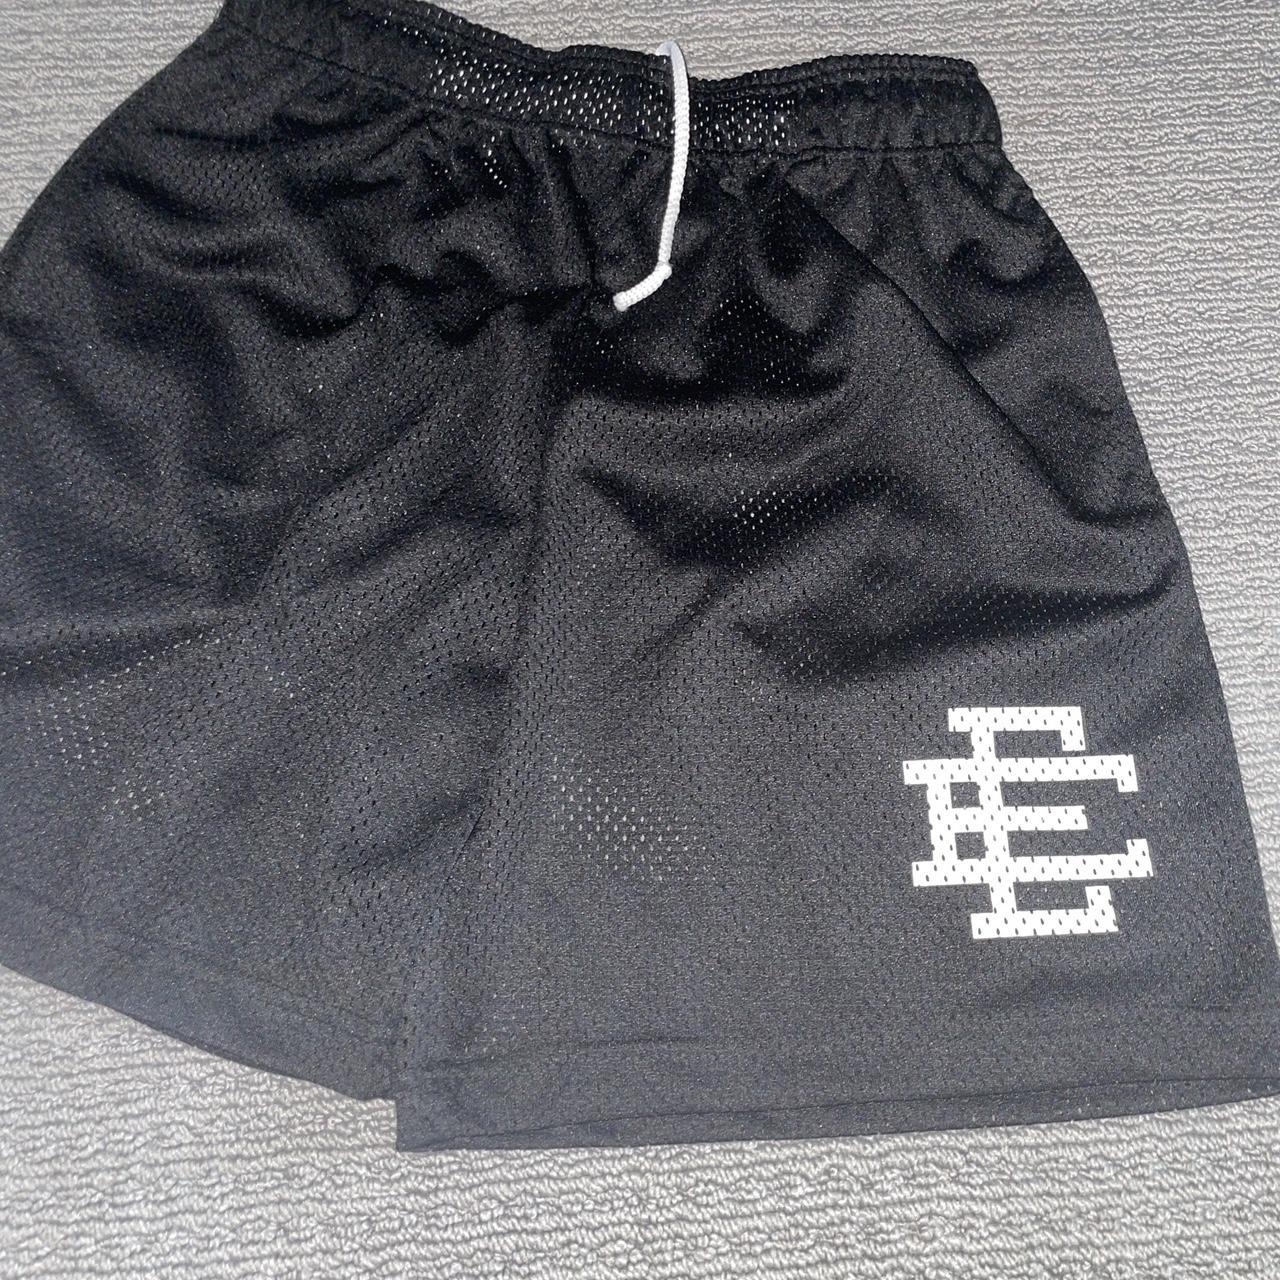 Eric Emanuel New Black & White Basic SS22 Shorts... - Depop